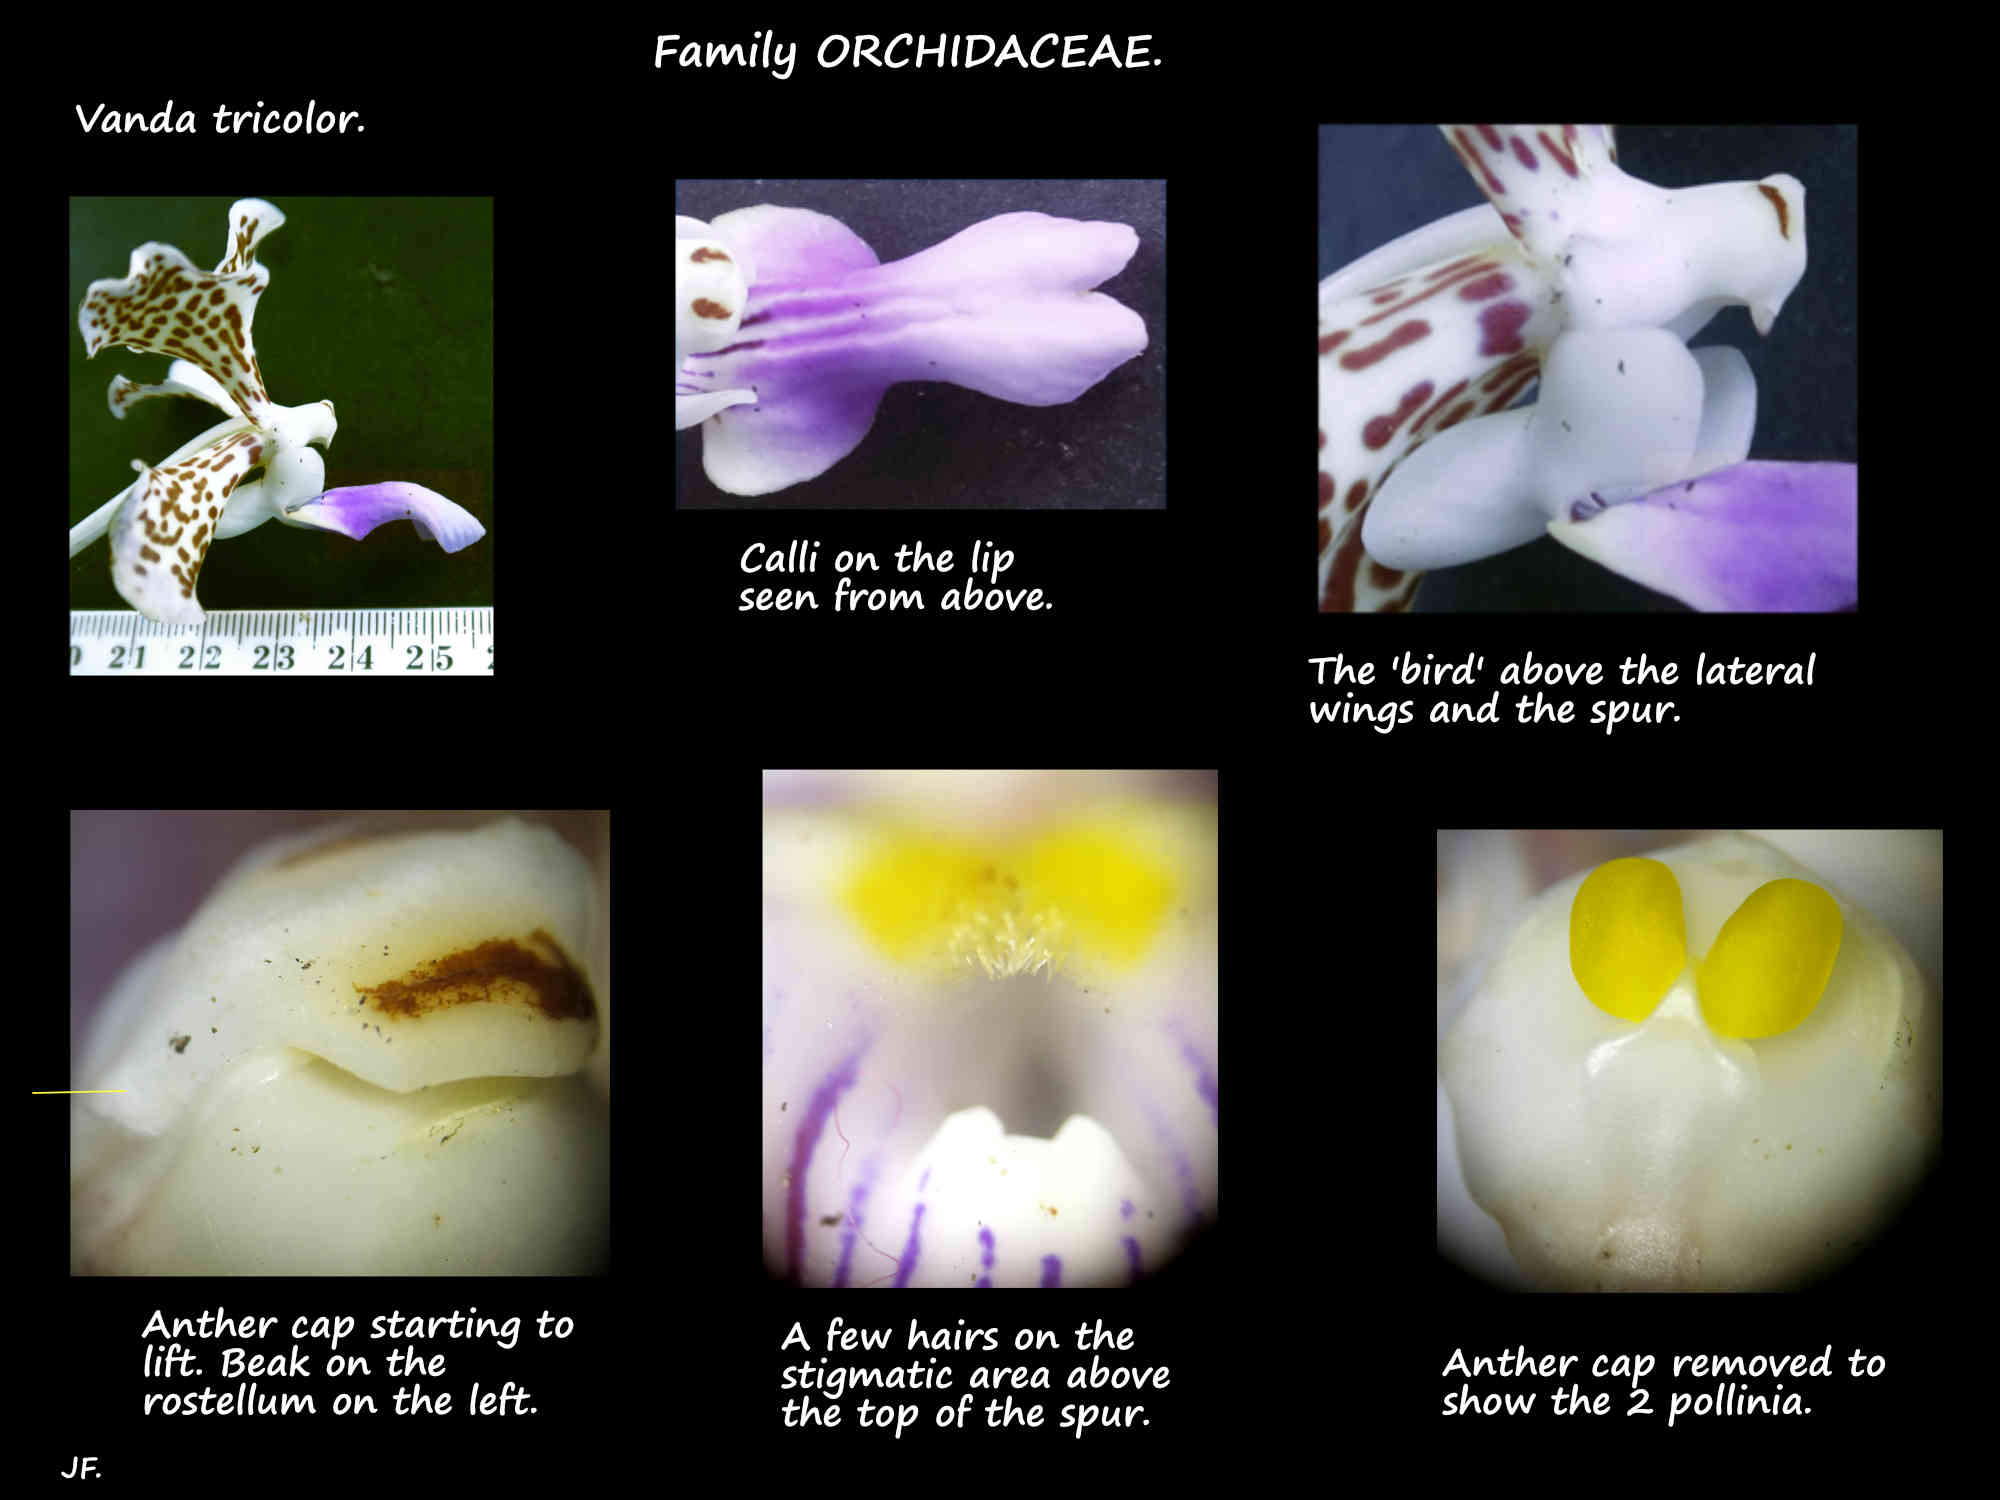 3 The anther cap & pollinia of Vanda tricolor